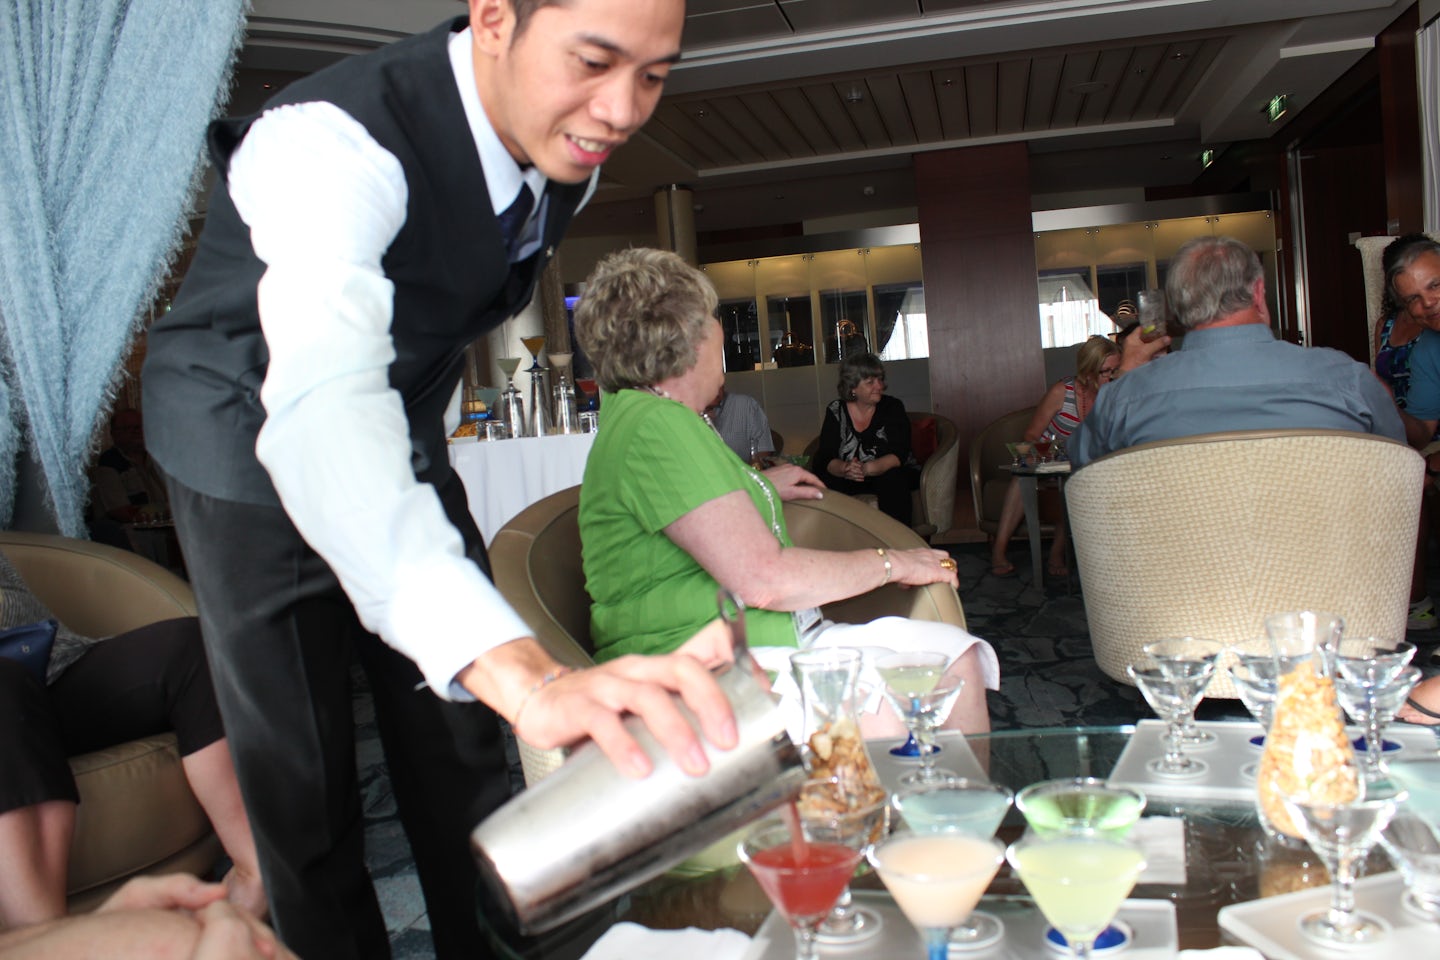 Cruise critic members martini tasting event